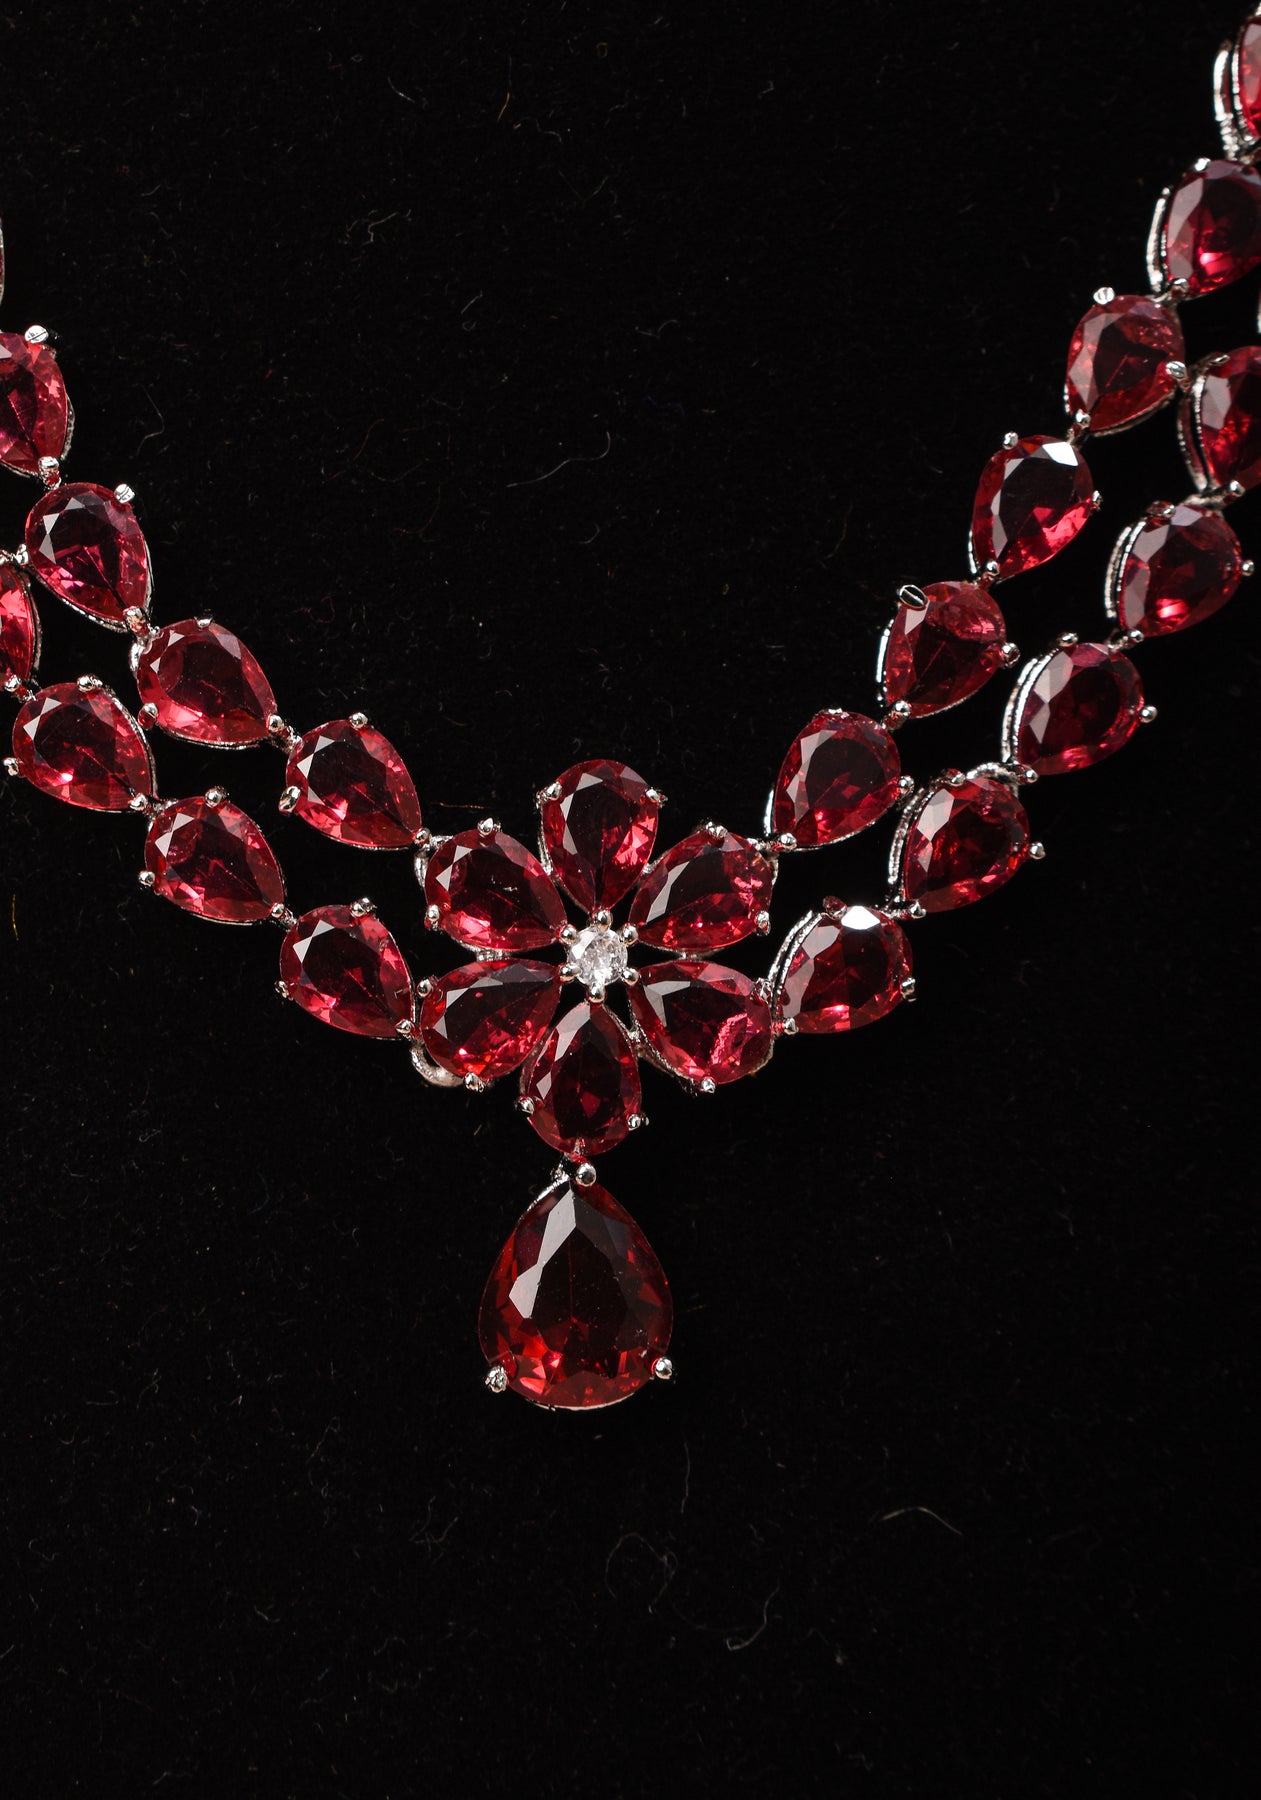 Shobitam Jewelry Layered Stone Necklace Set